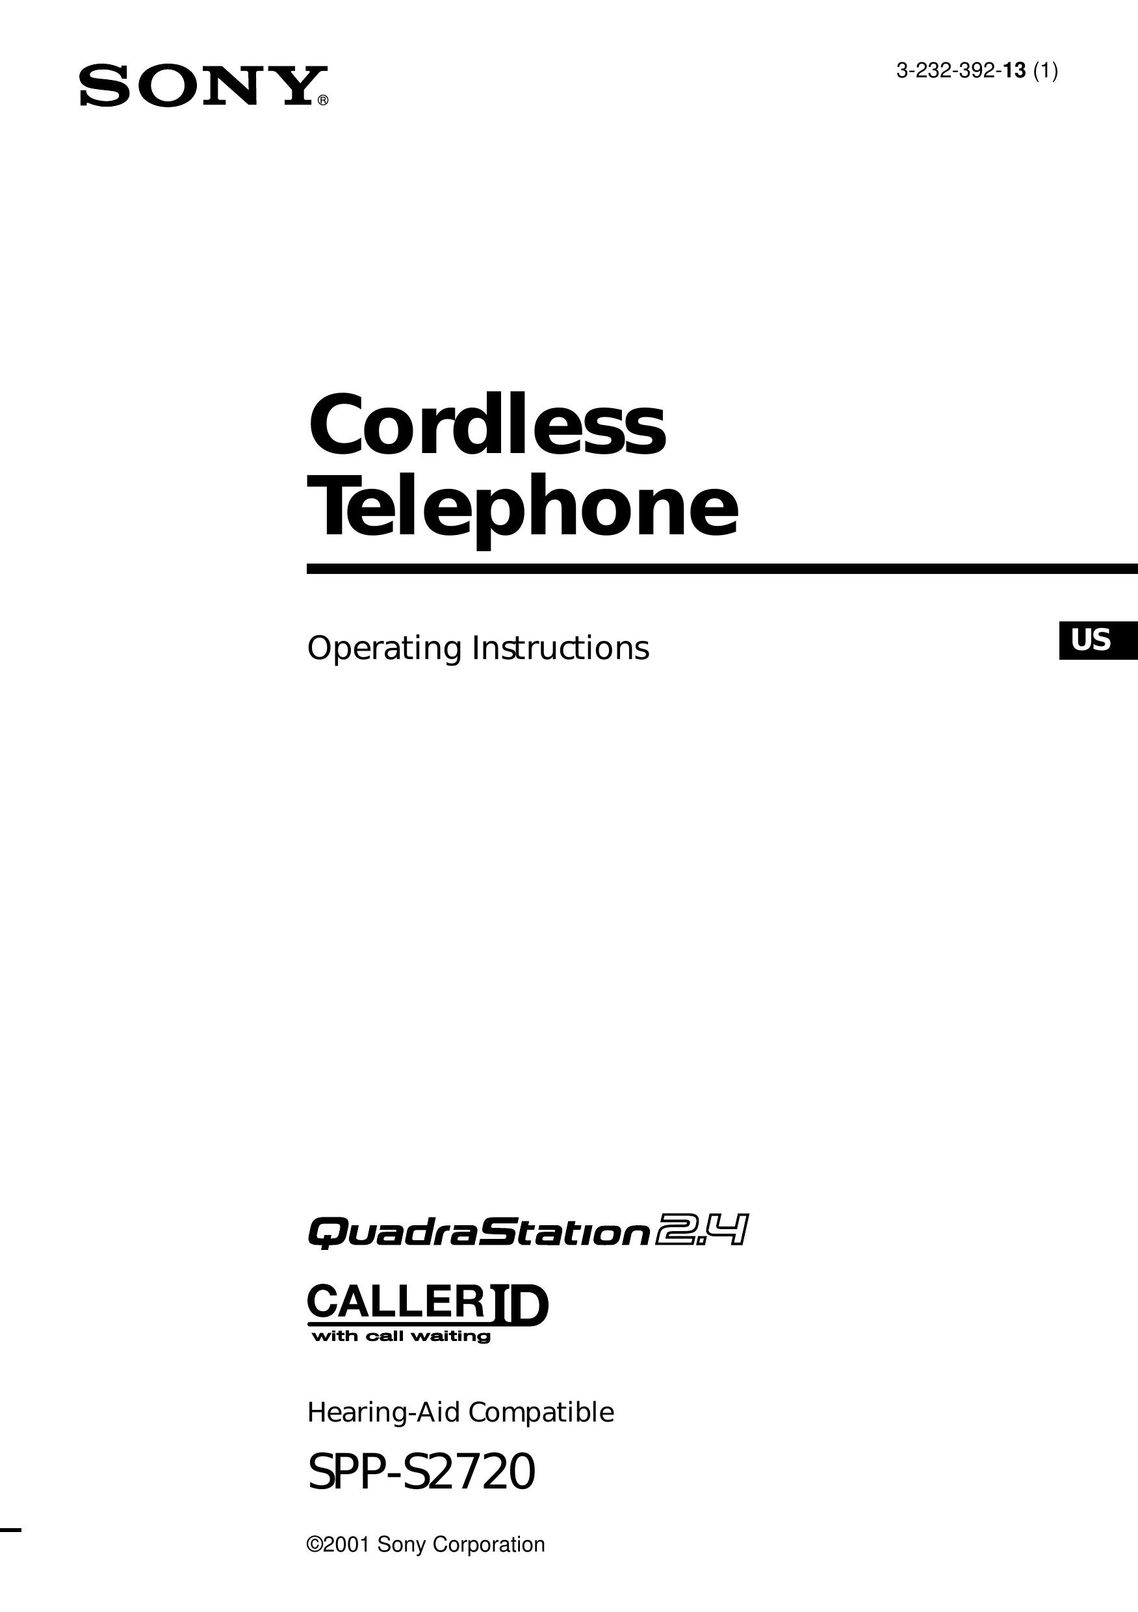 Sony SPP-S2720 Cordless Telephone User Manual